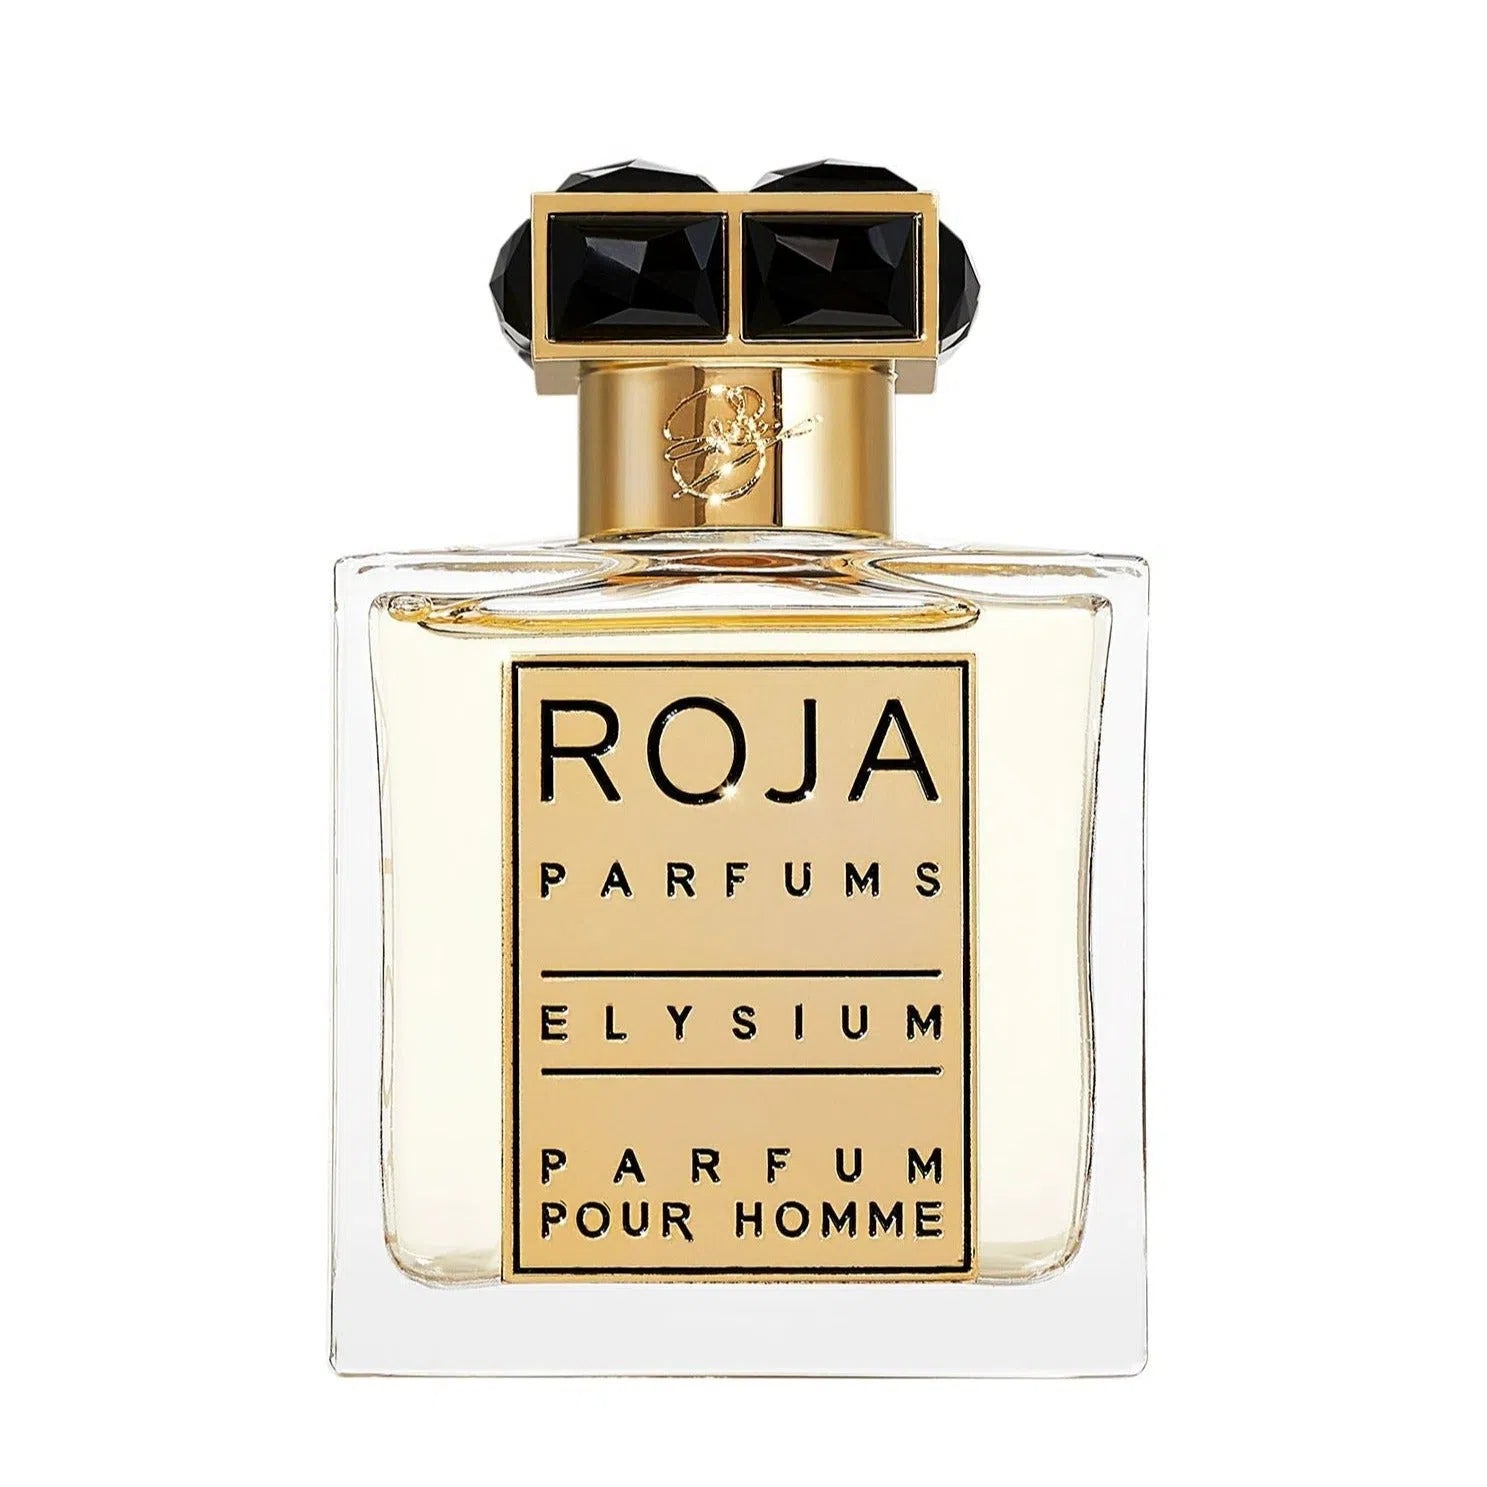 Perfume Roja Parfums Elysium Pour Homme Parfum (M) / 50 ml - 5060399671316- Prive Perfumes Honduras